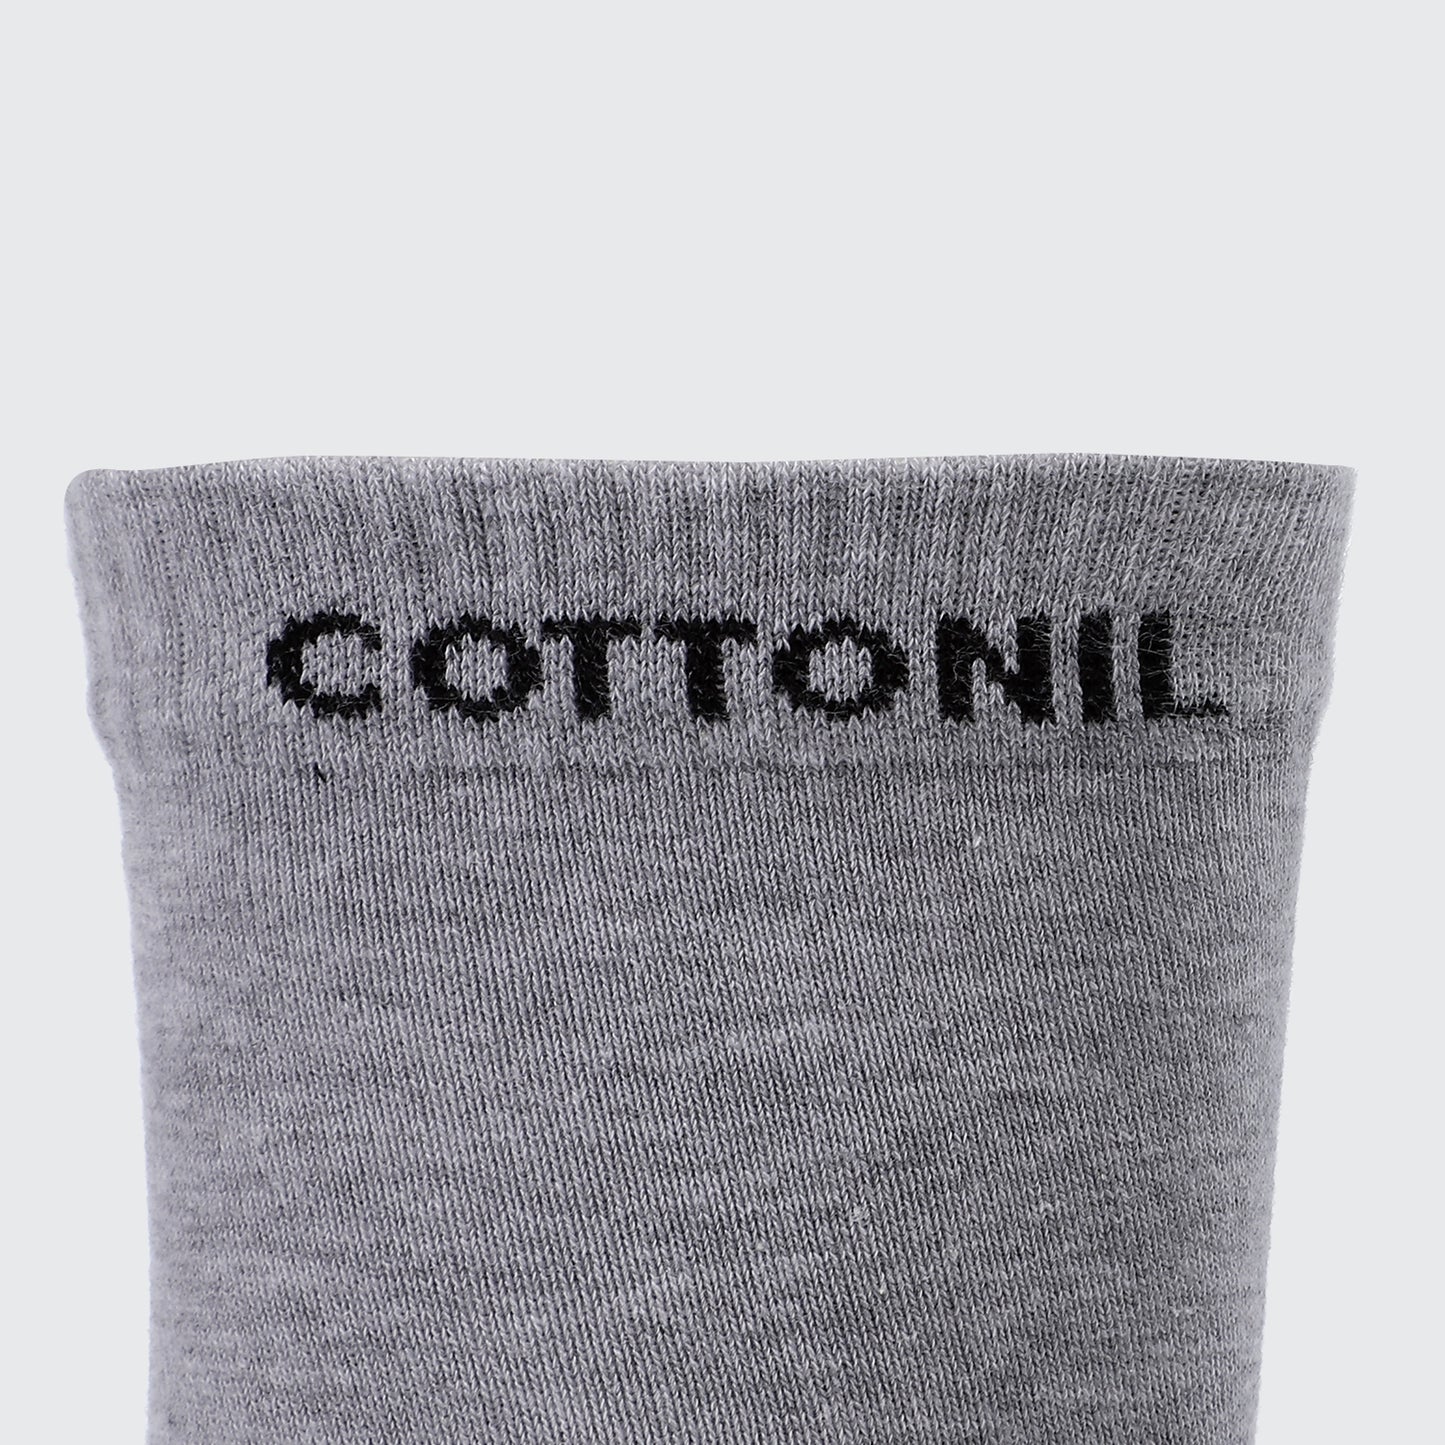 Sportive Cotton Mid Calf Men Socks - Pack Of 6 ریاضة رجالى نصف فوطة